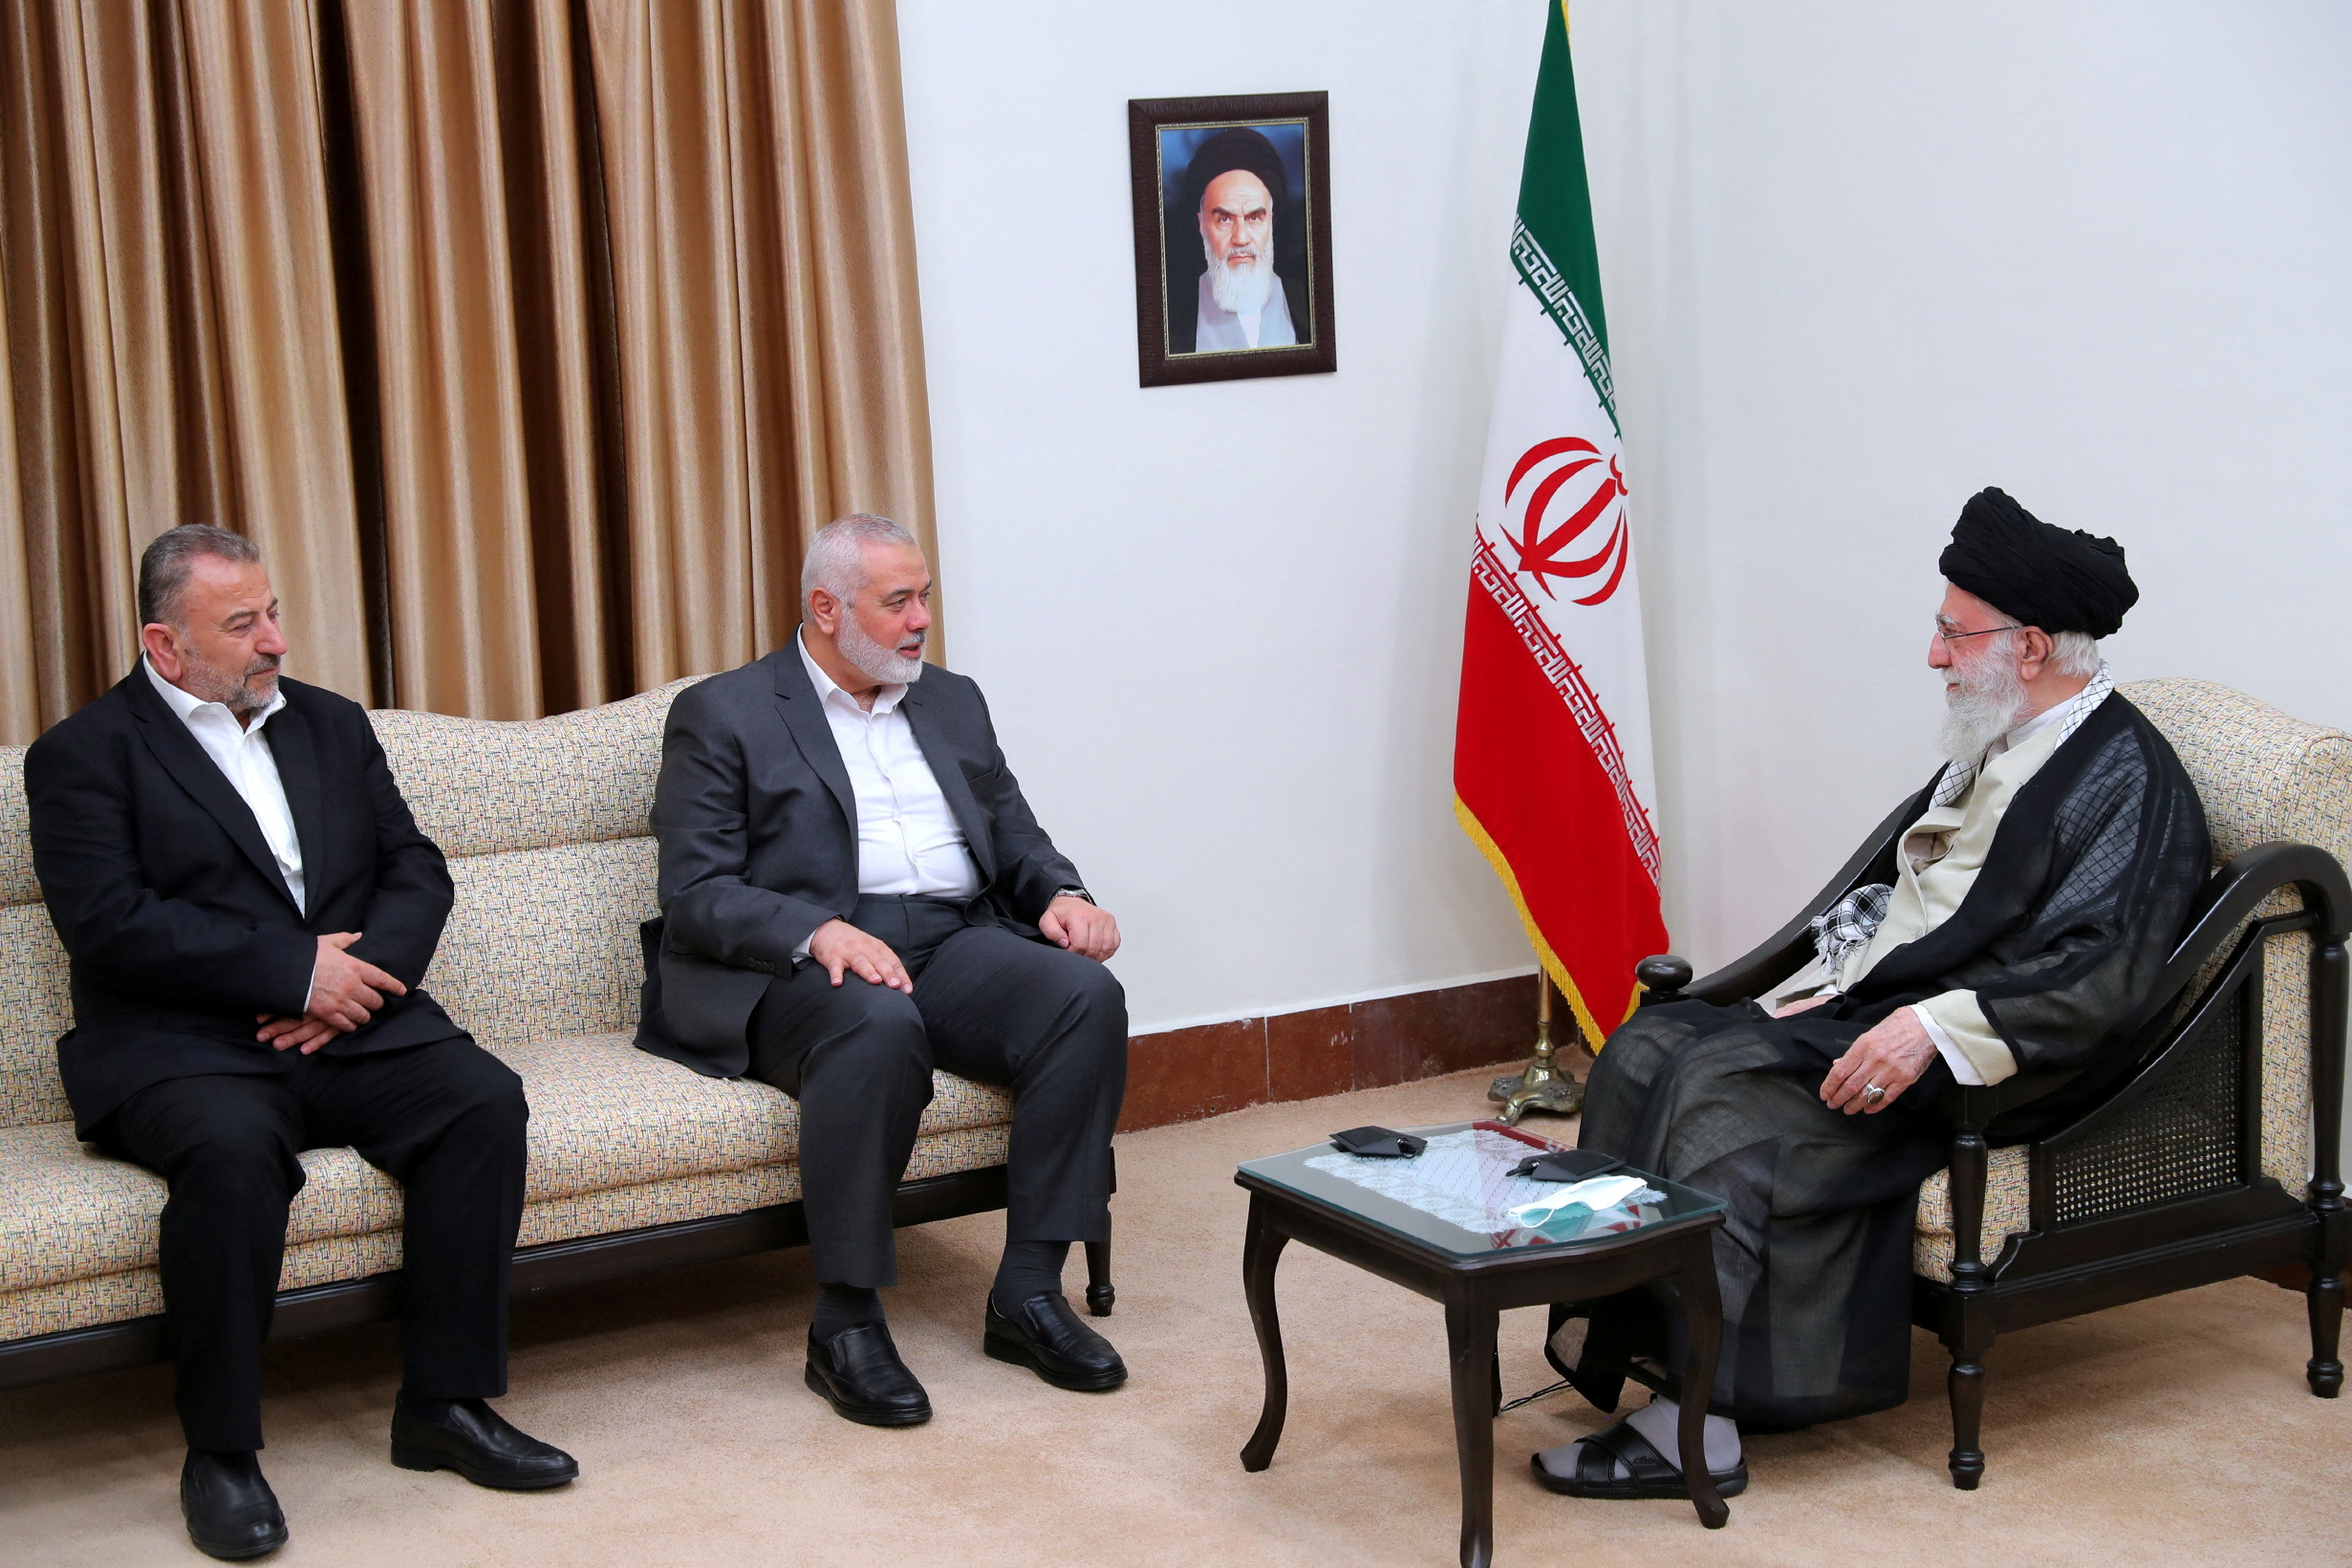 Iran's Supreme Leader Ayatollah Ali Khamenei meets with Palestinian group Hamas' top leader, Ismail Haniyeh, in Tehran